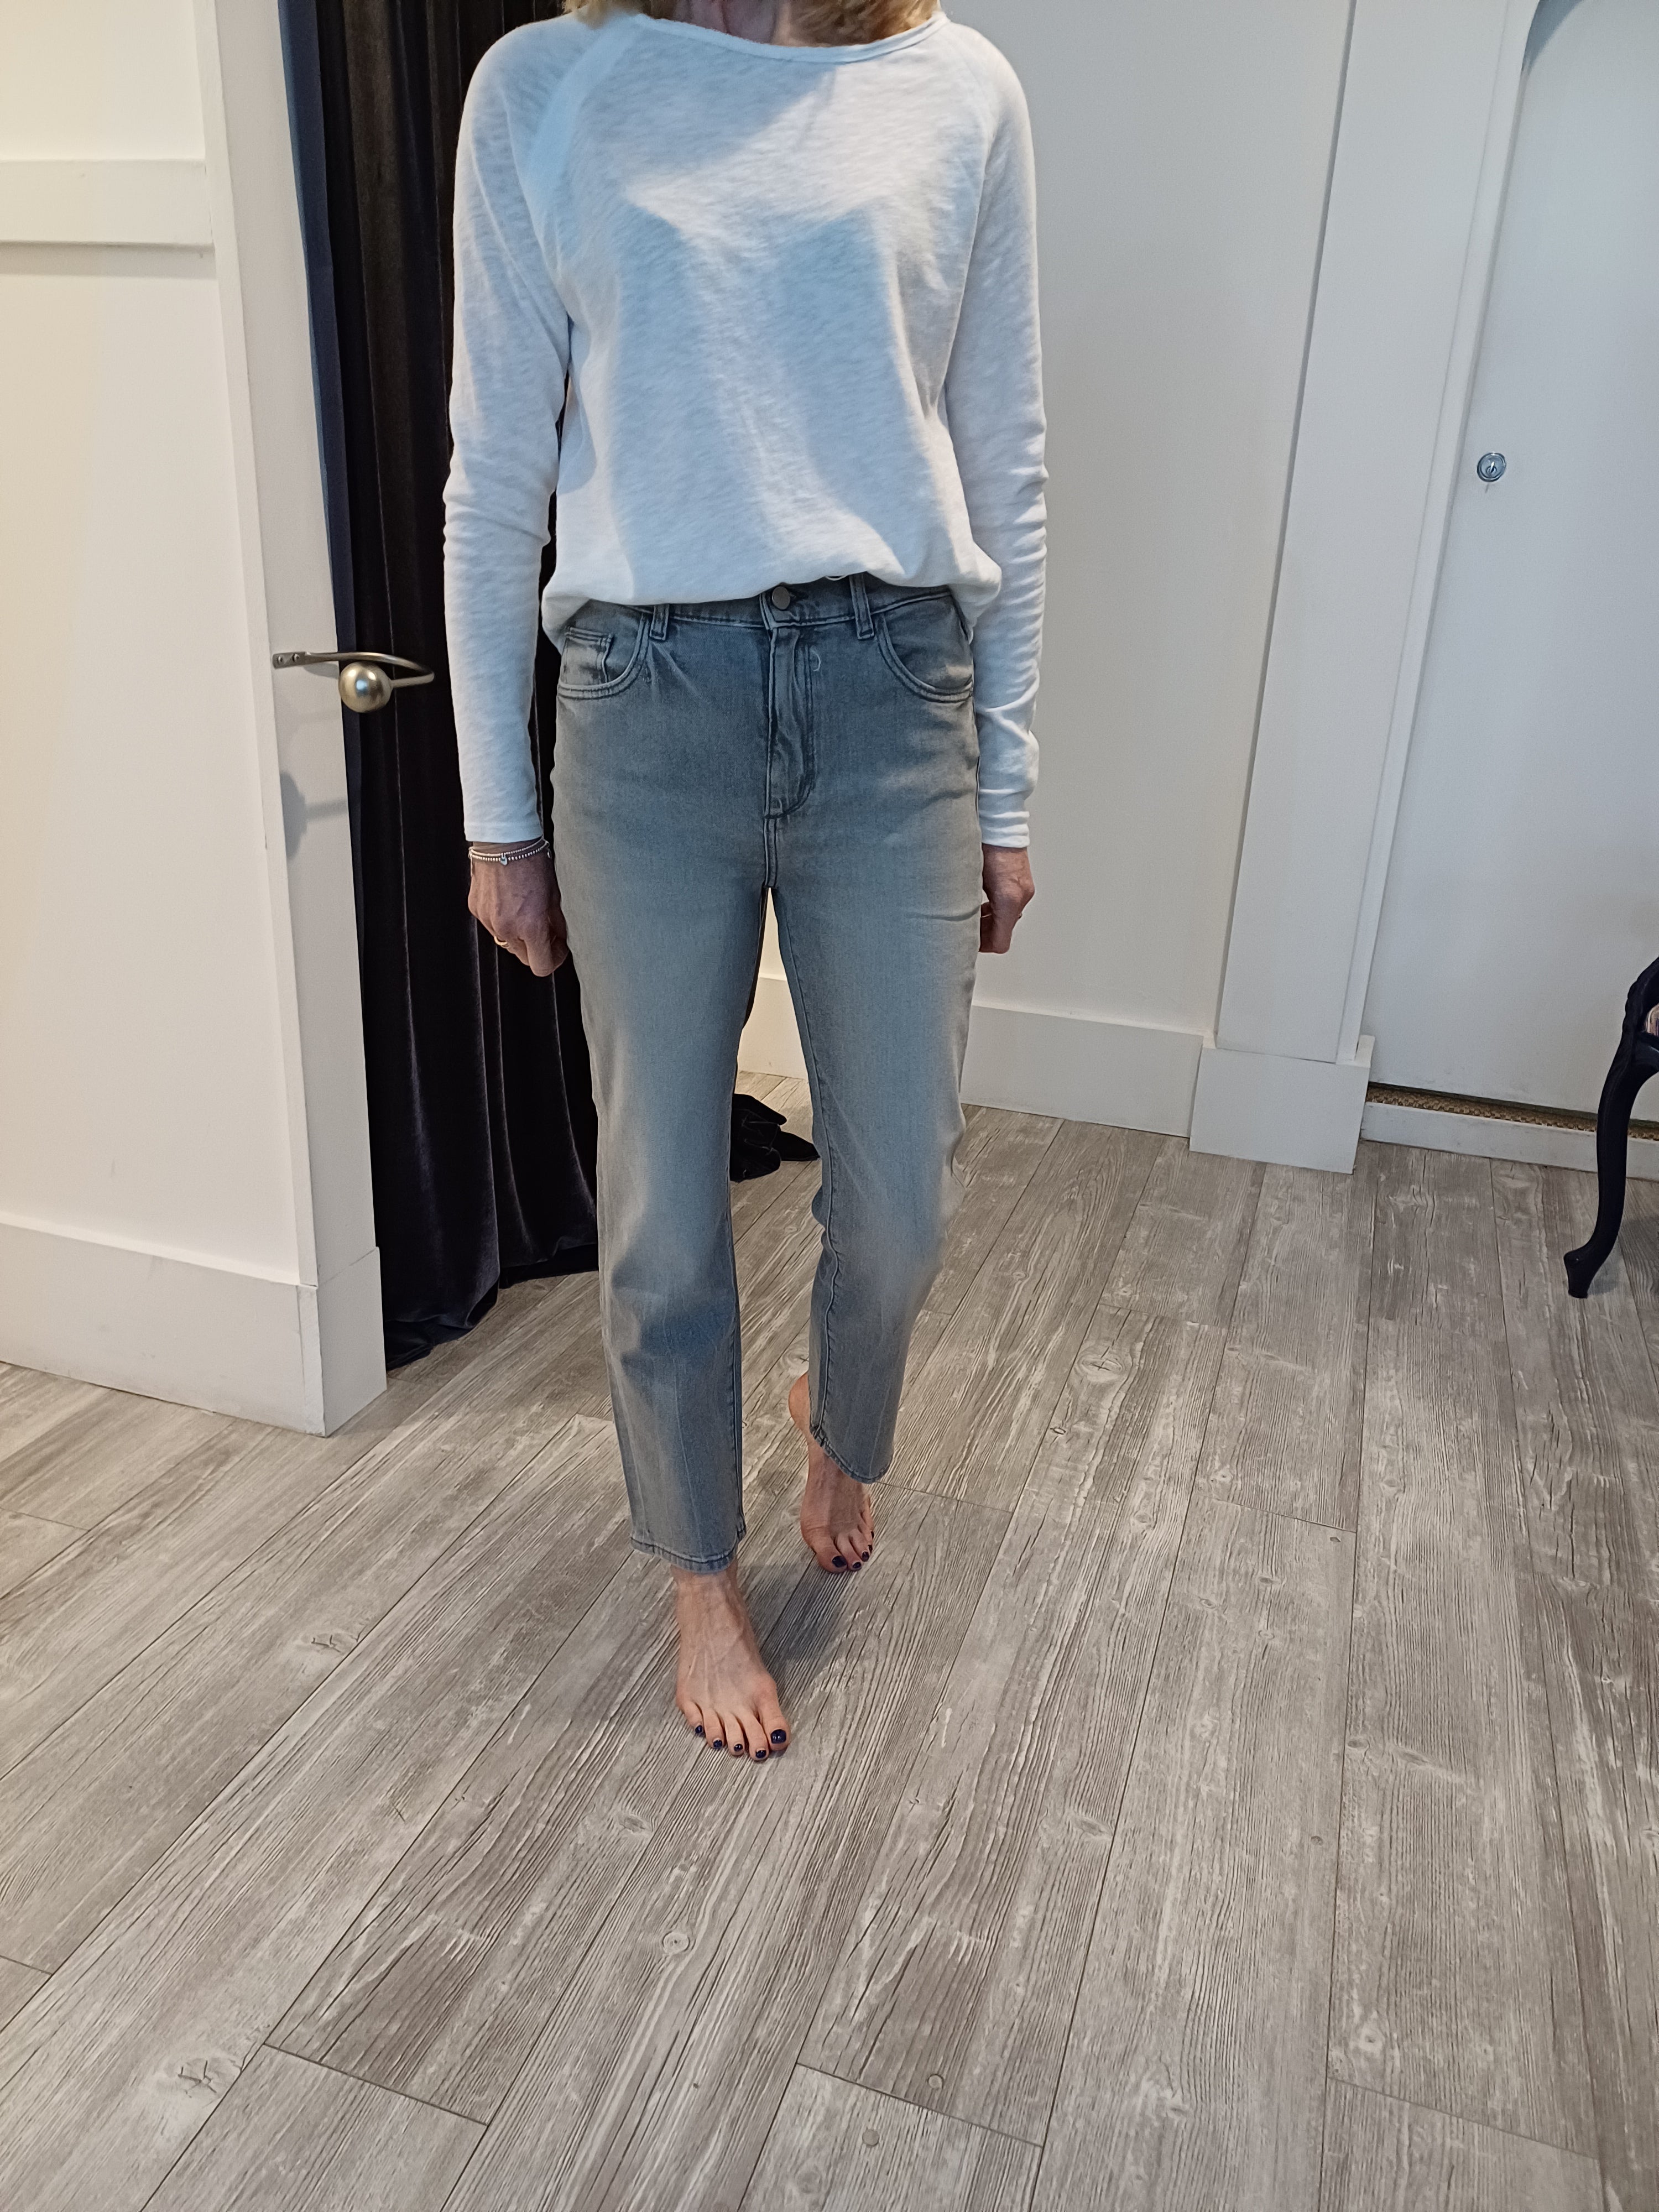 DL1961 Patti Straight Jeans - Grey